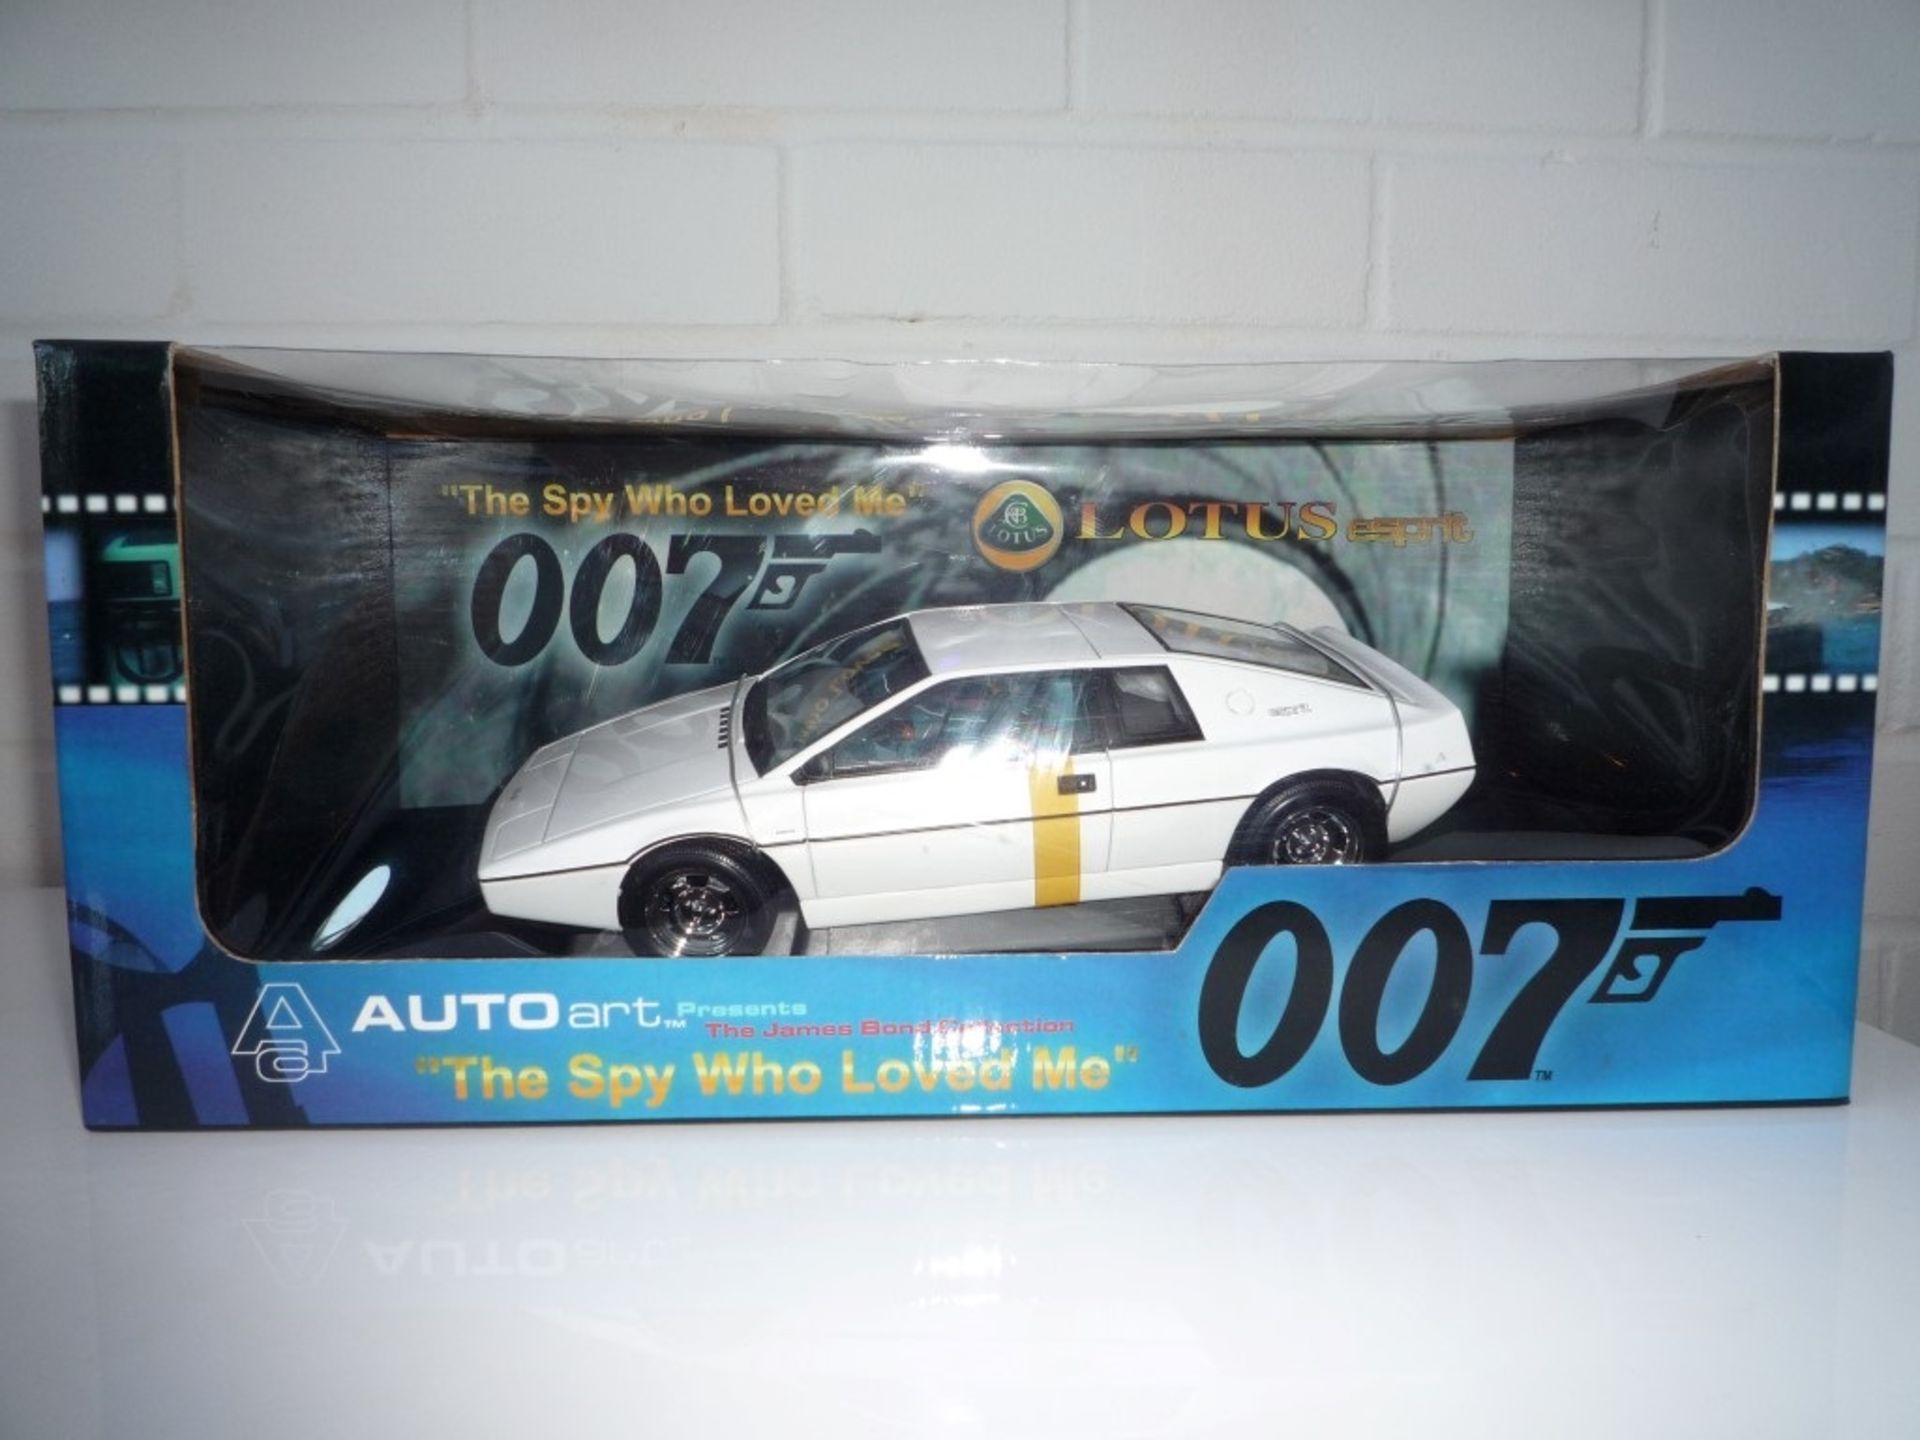 James Bond The Spy Who Loved Me model car - Image 2 of 2